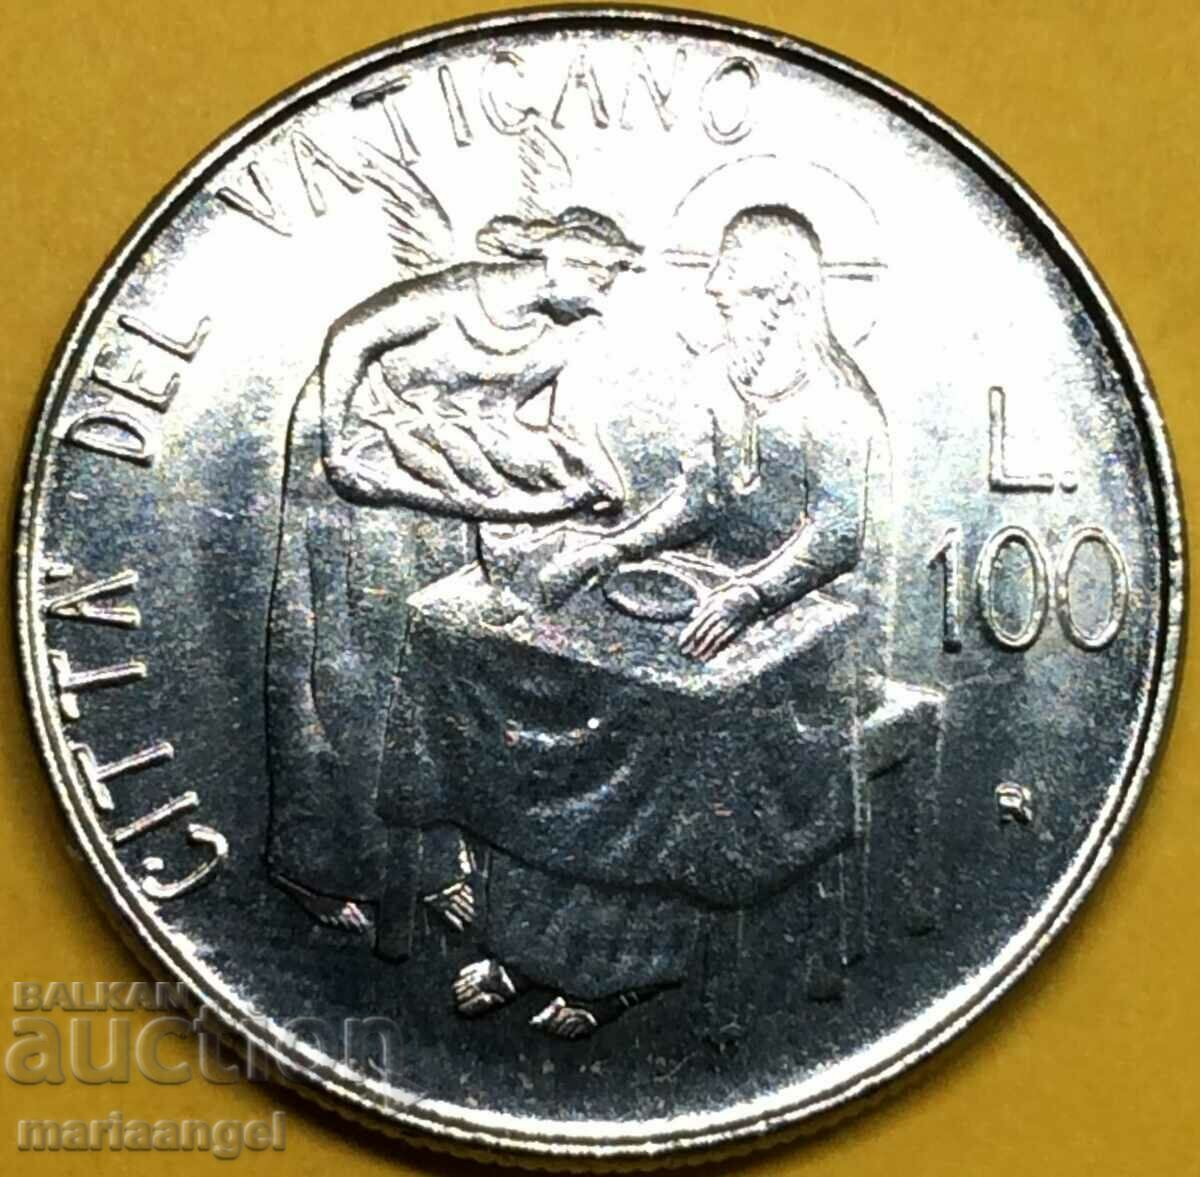 100 lira 1981 Vatican "4 fishes" 27mm